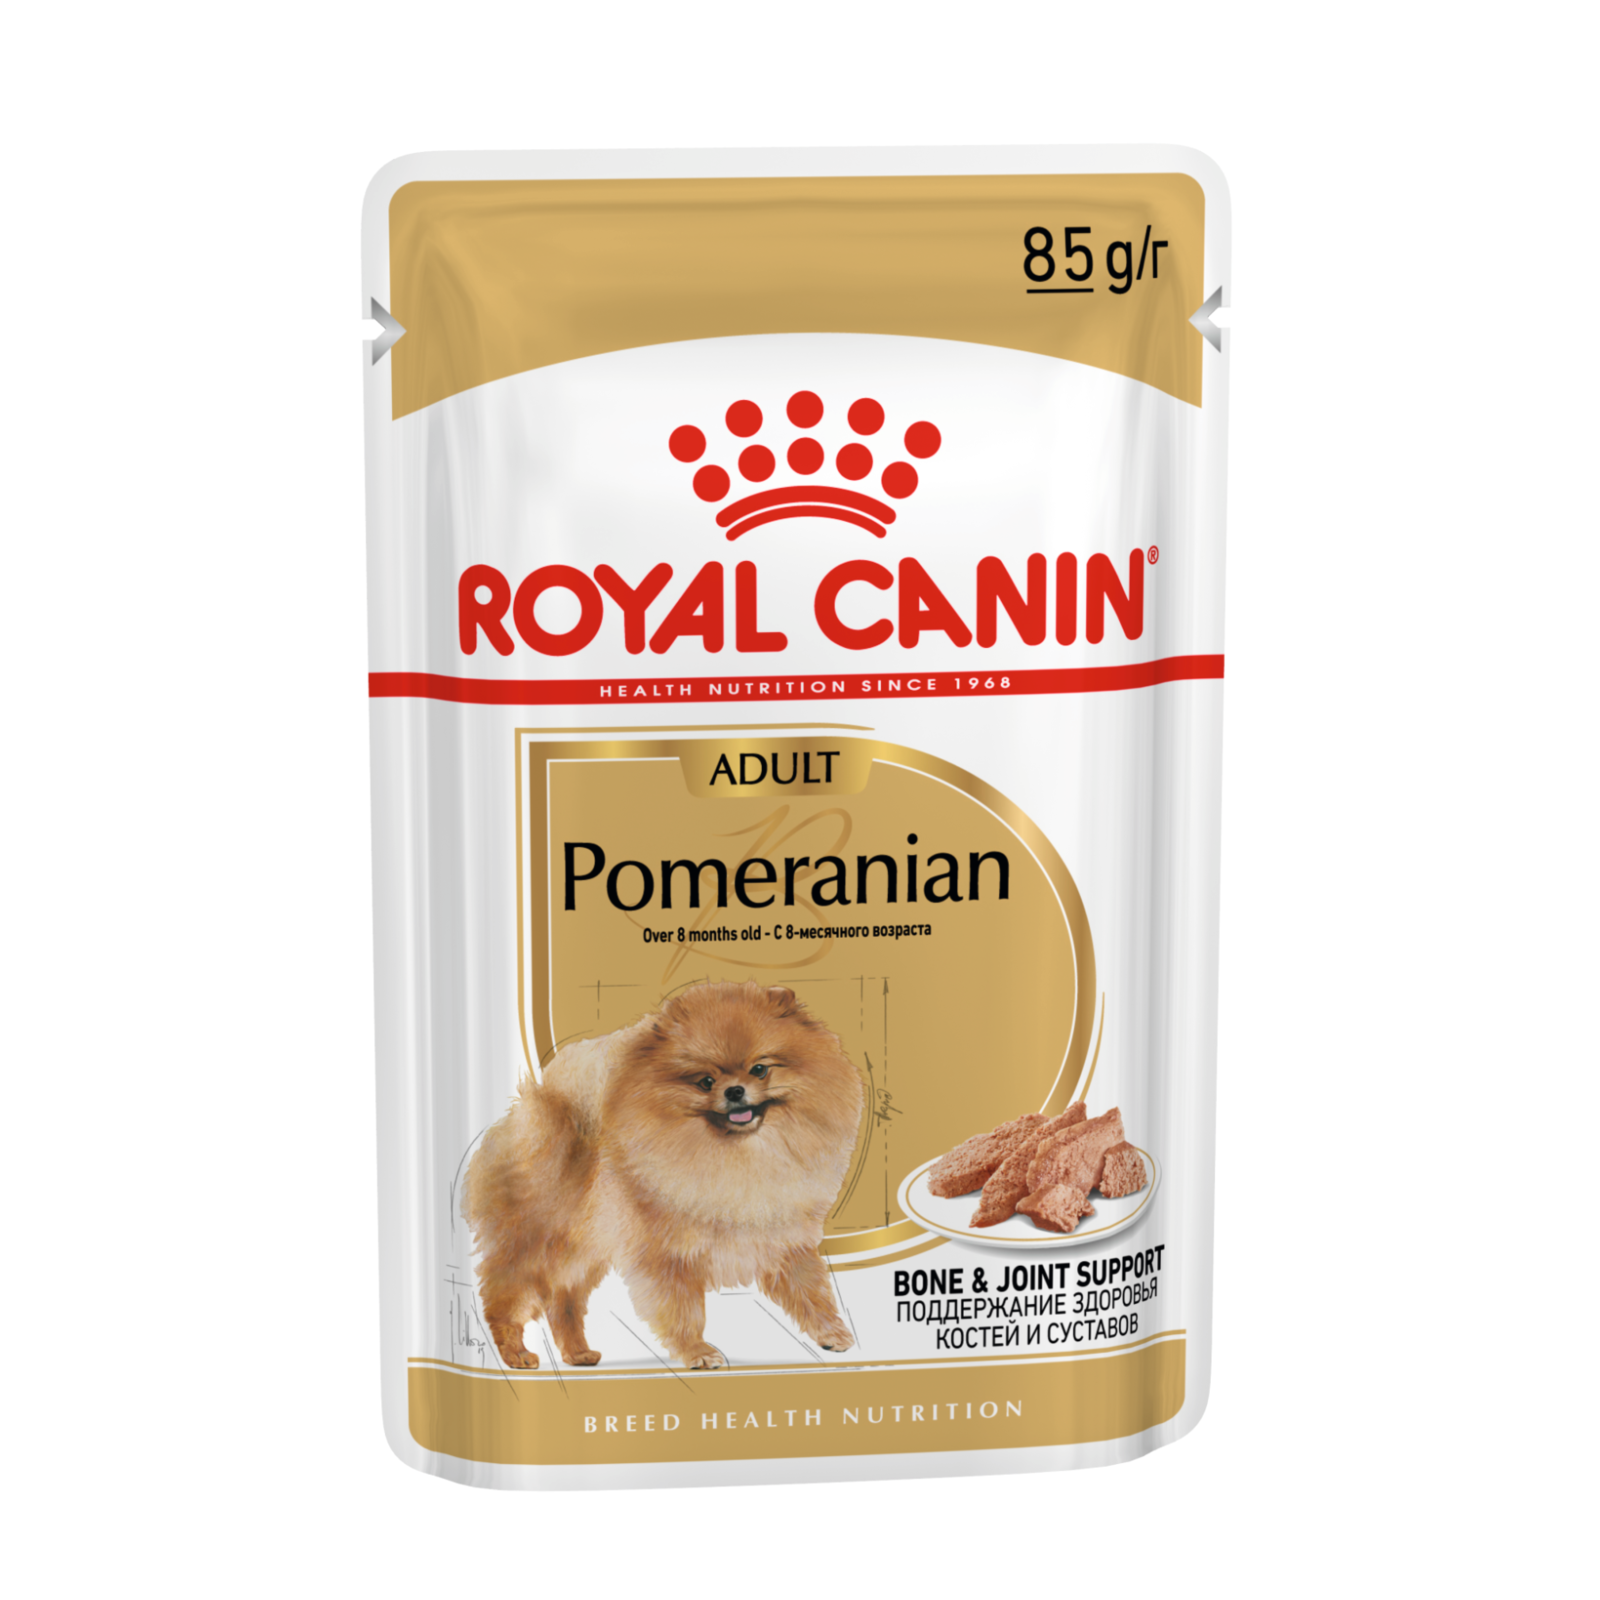 Royal Canin Dog Food Pouch Adult Pomeranian